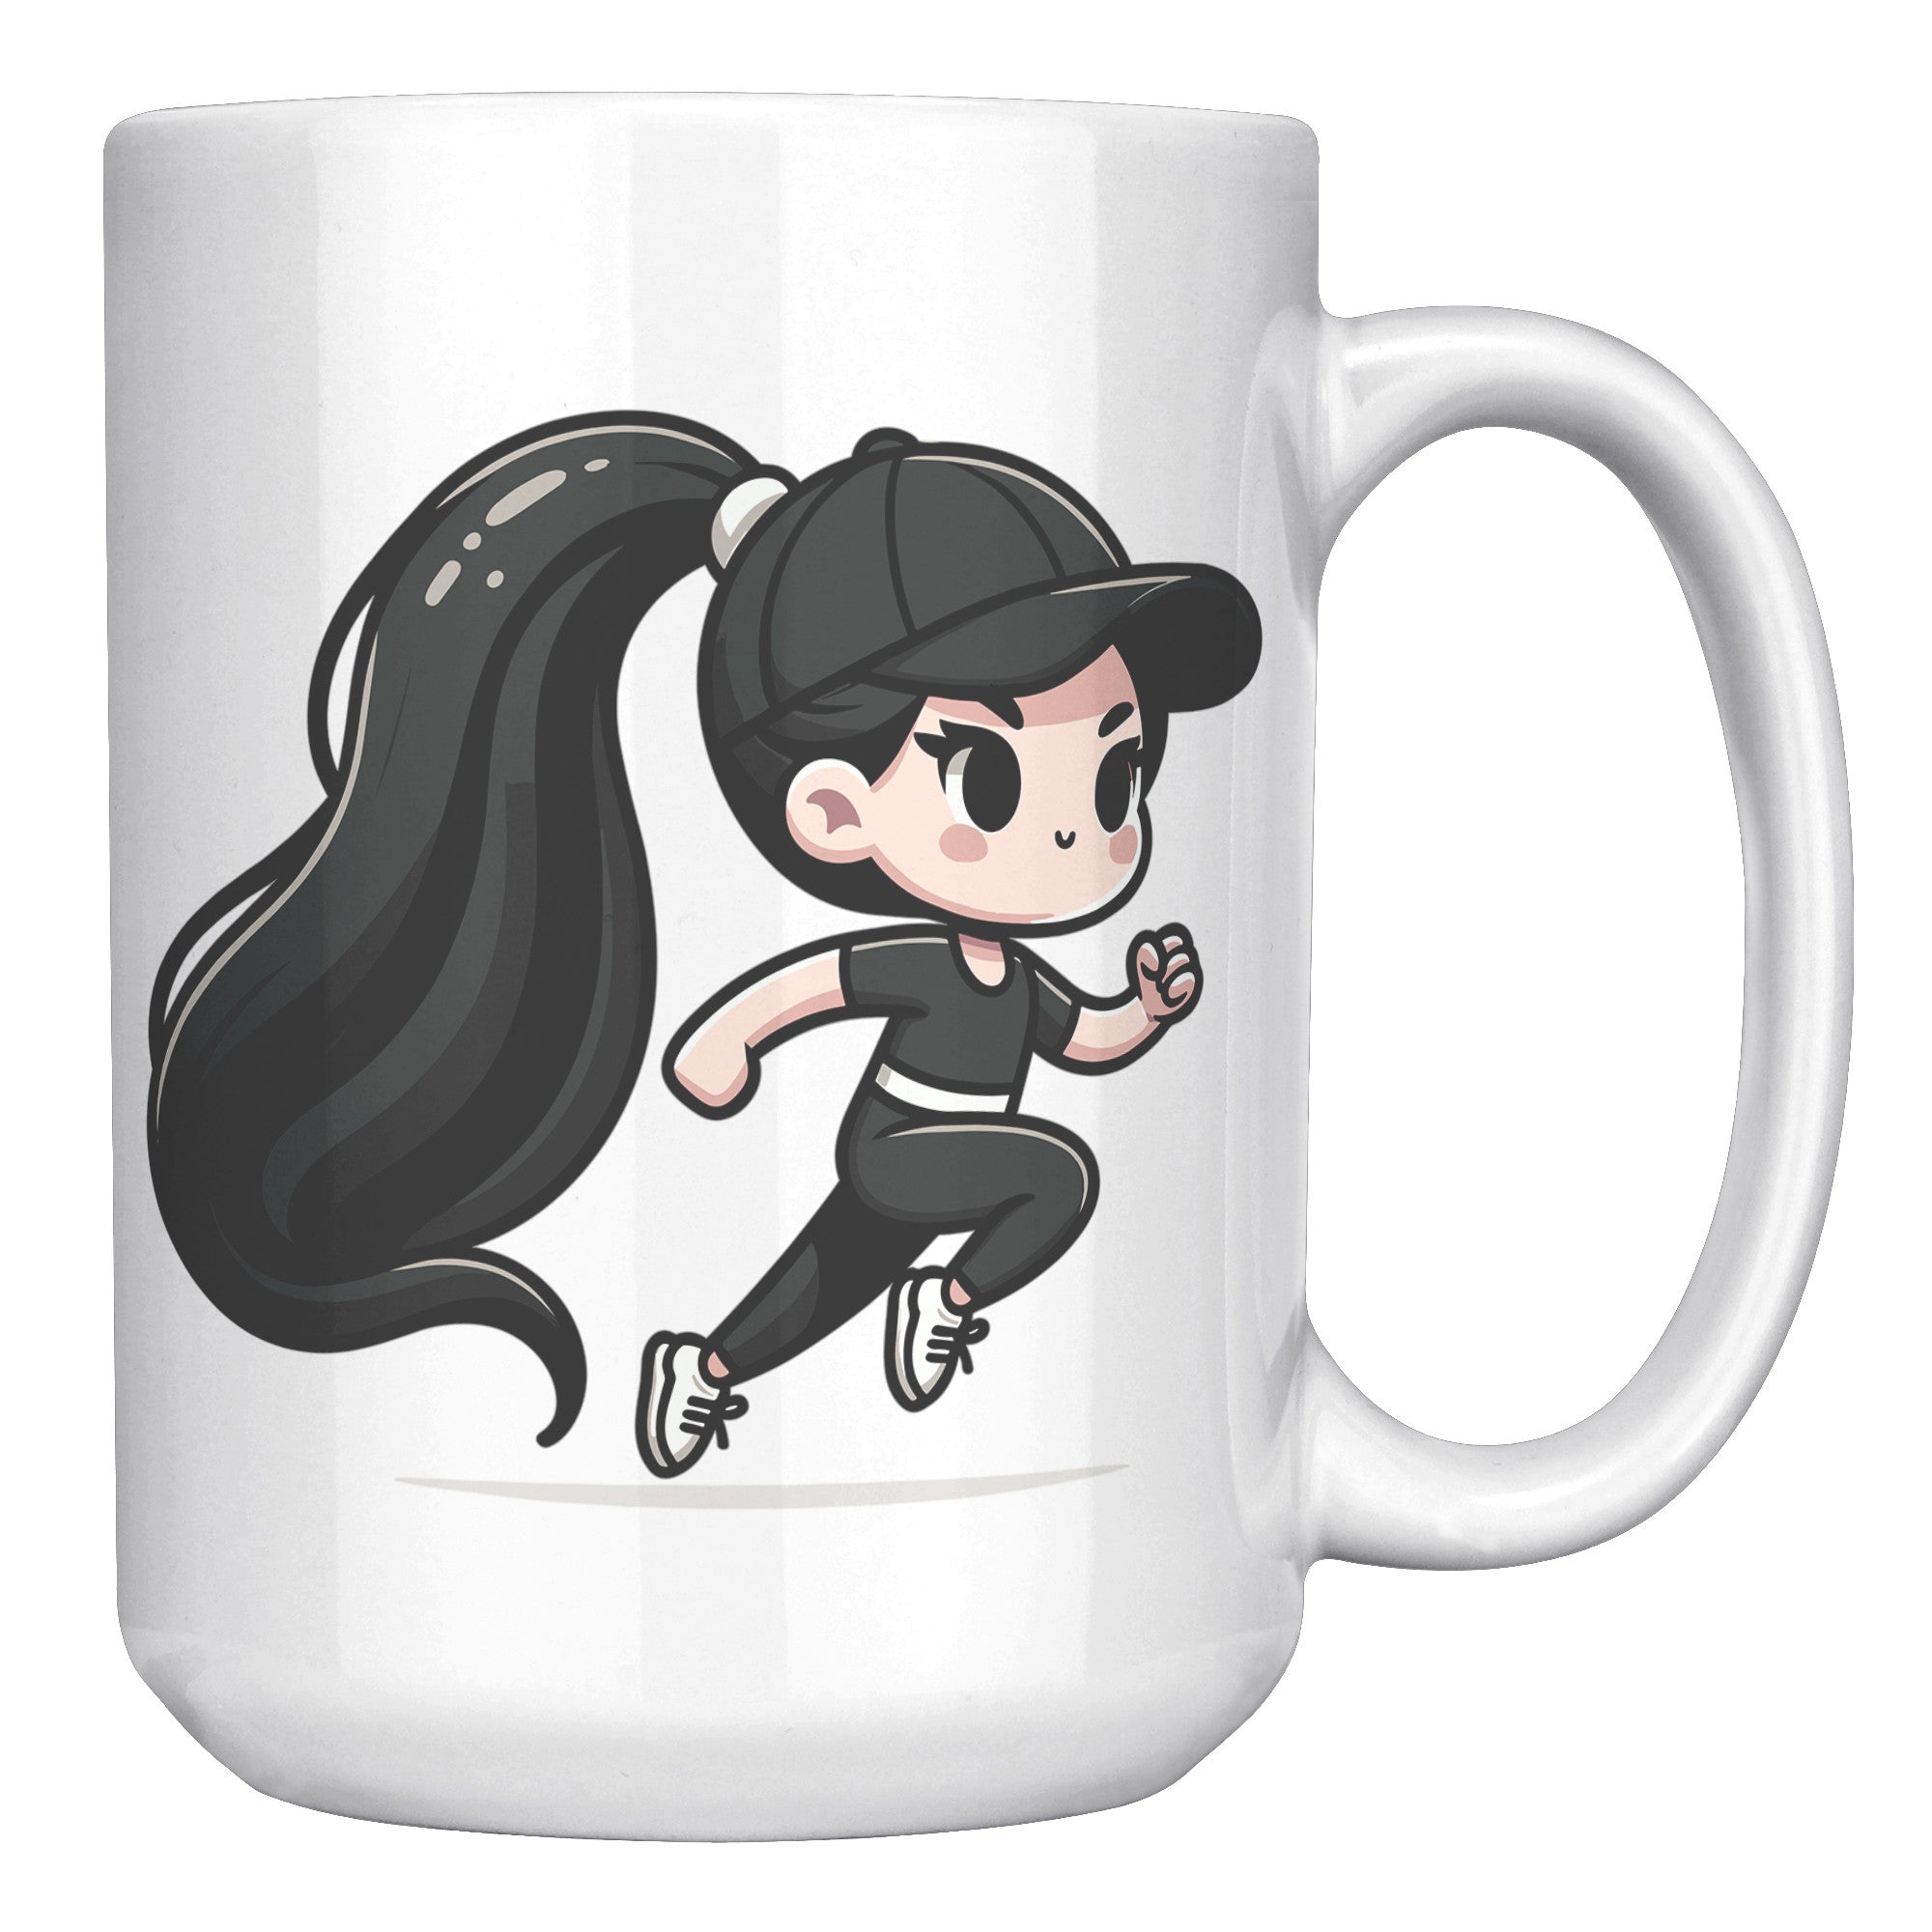 "Female Runner Coffee Mug - Inspirational Running Quotes Cup - Perfect Gift for Women Runners - Motivational Marathoner's Morning Brew" - G1